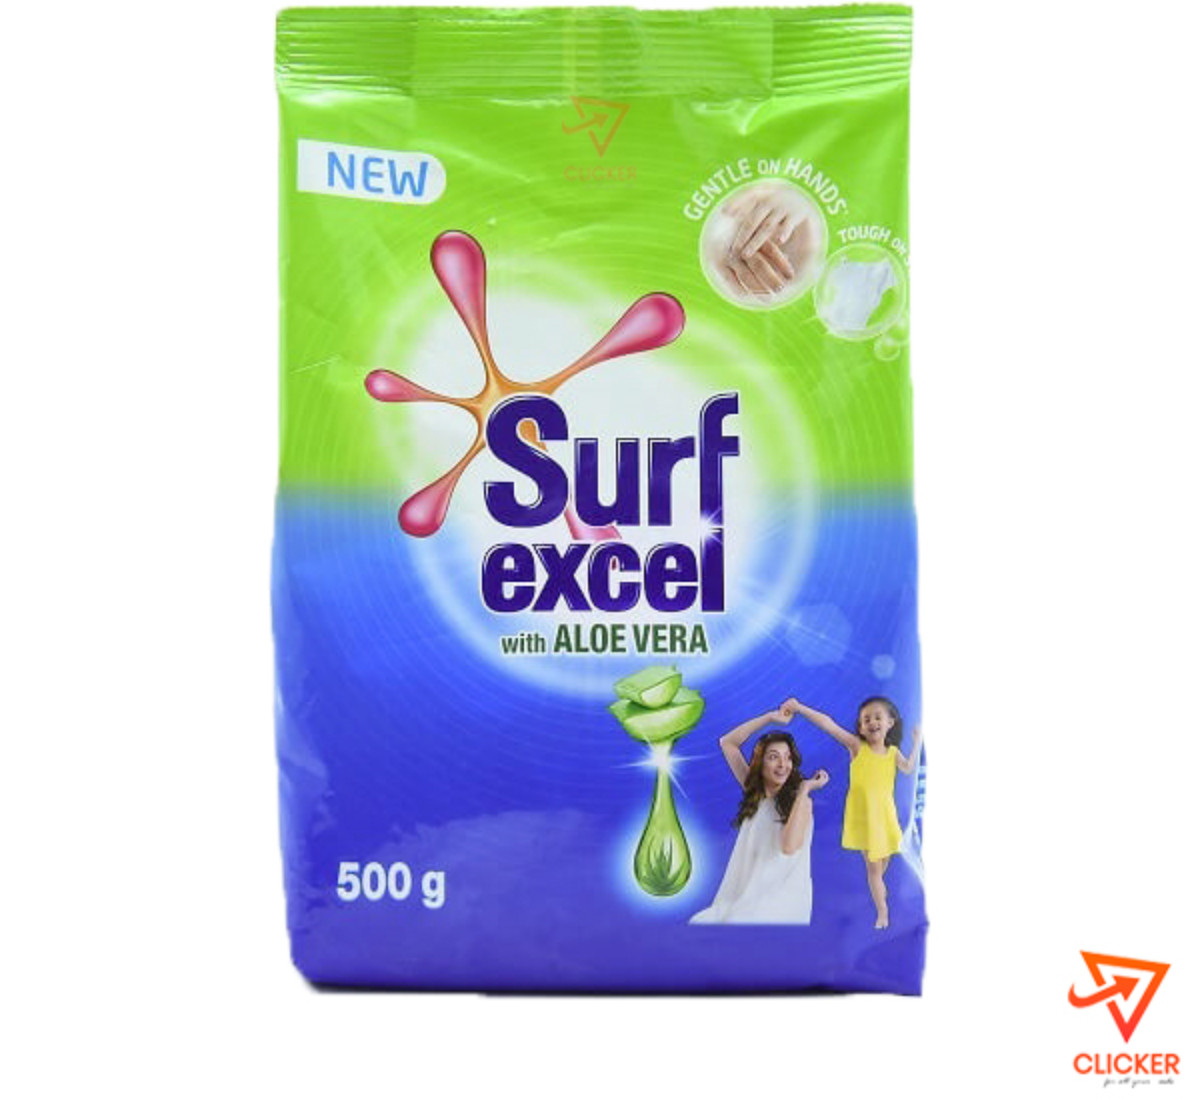 Clicker product 500g SURF EXCEL with Aloe vera Detergent Powder 816